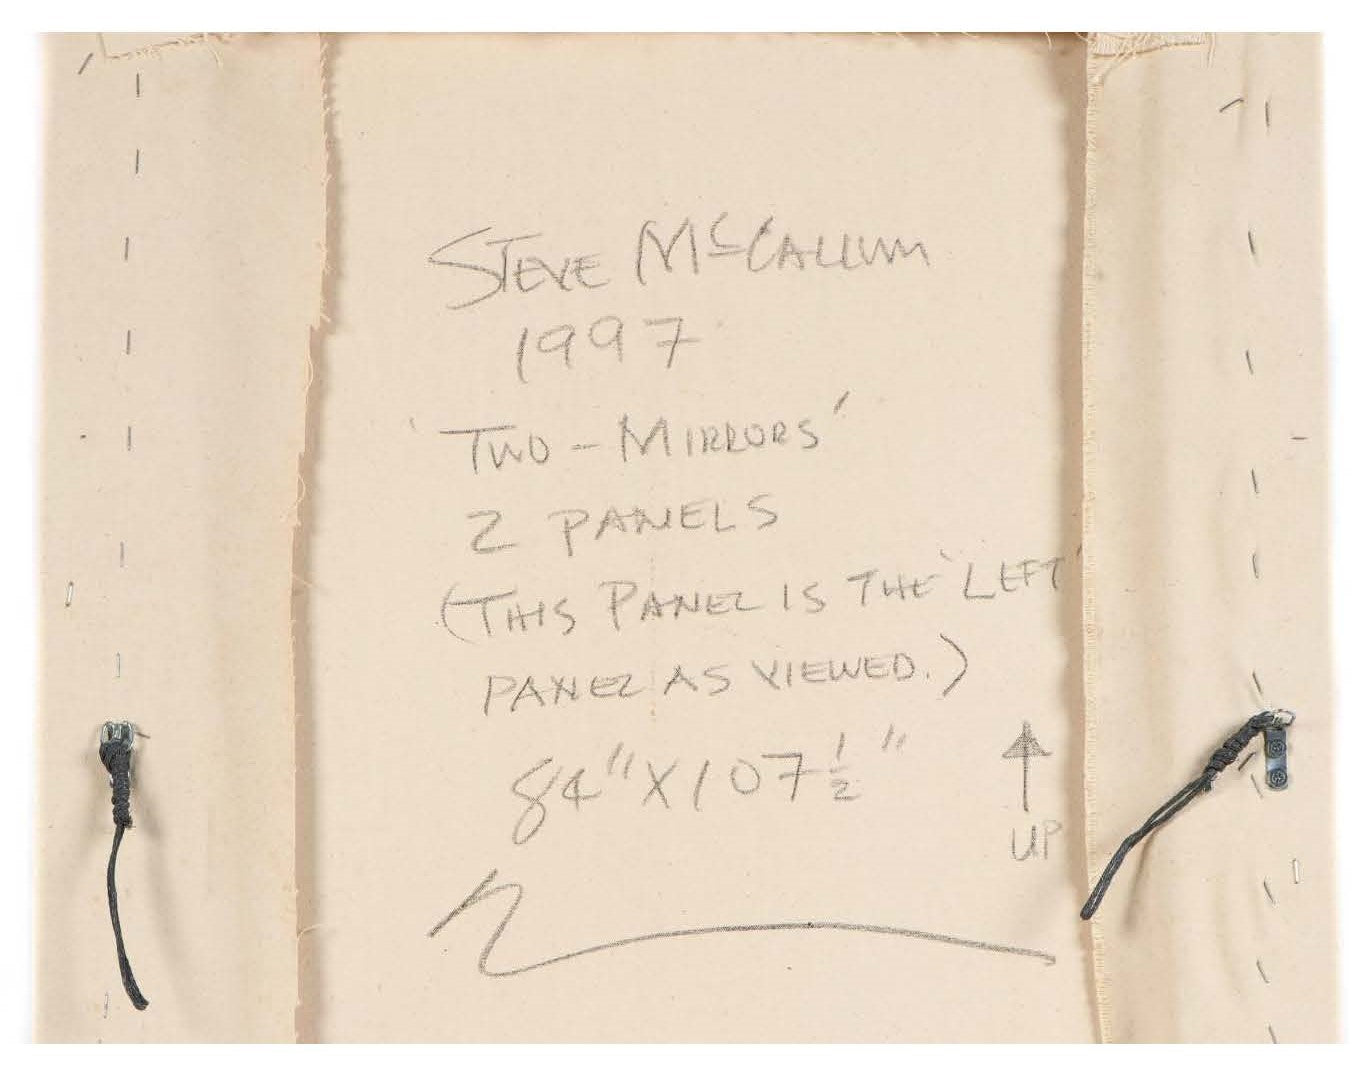 Steve McCallum- Two Mirrors, 1997